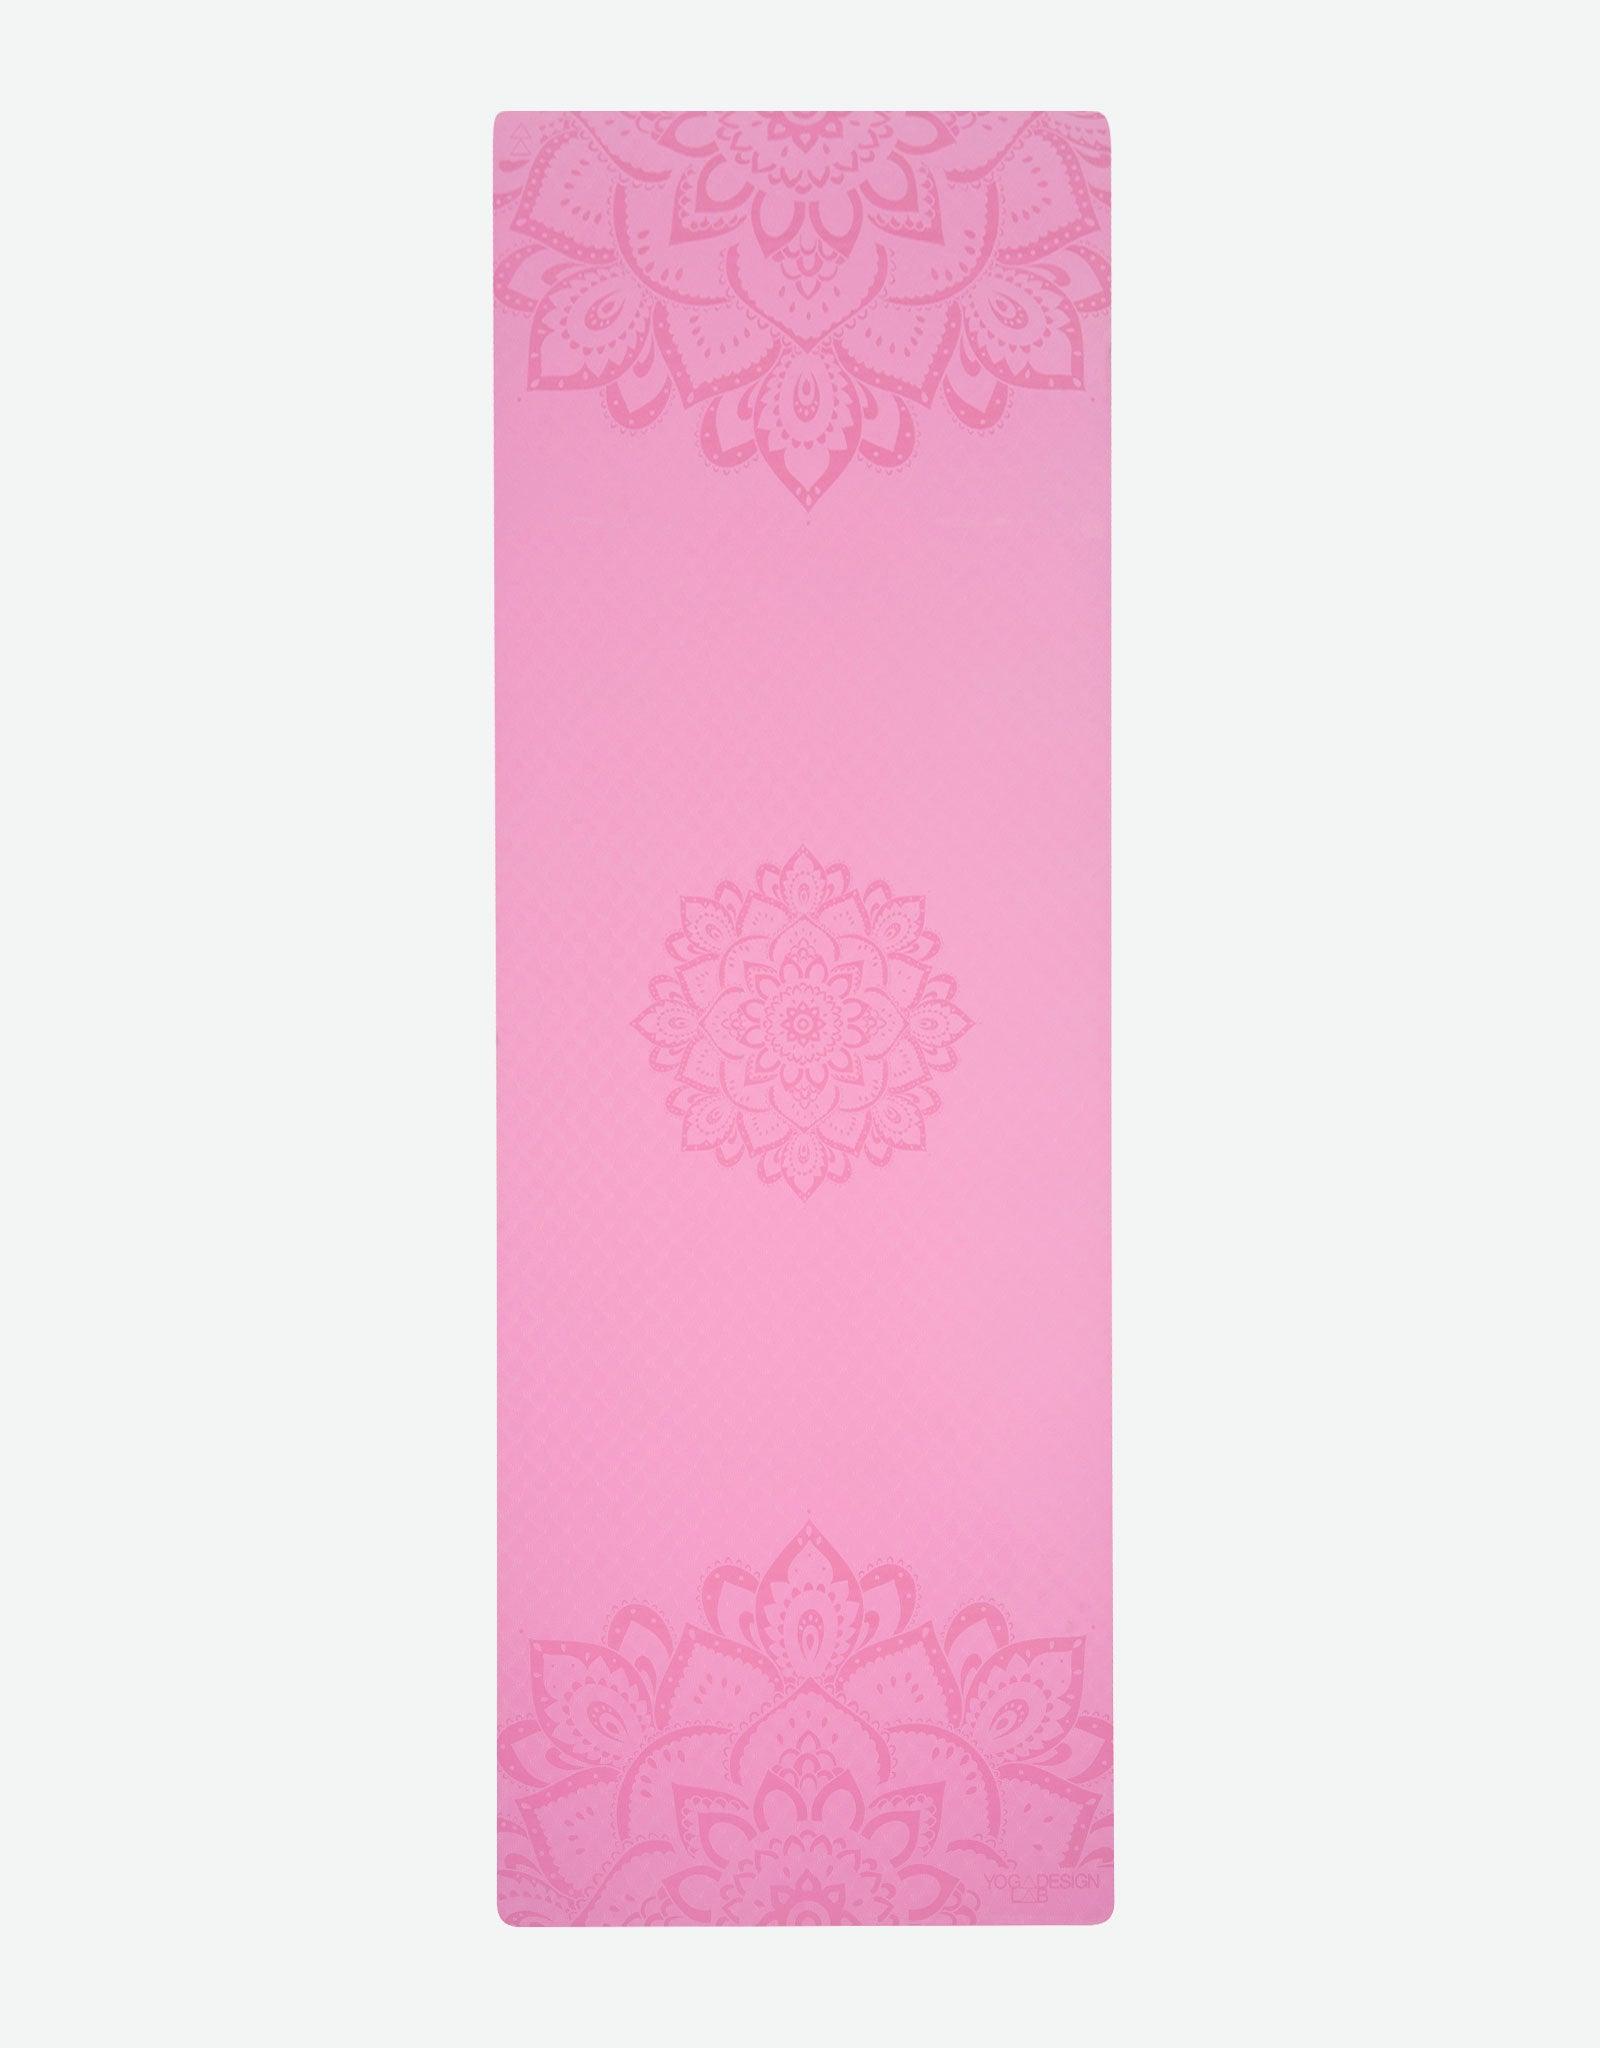 Flow Yoga Mat Pure Mandala Rose 6mm - Ideal Mat For Beginners for Yoga  Sessions